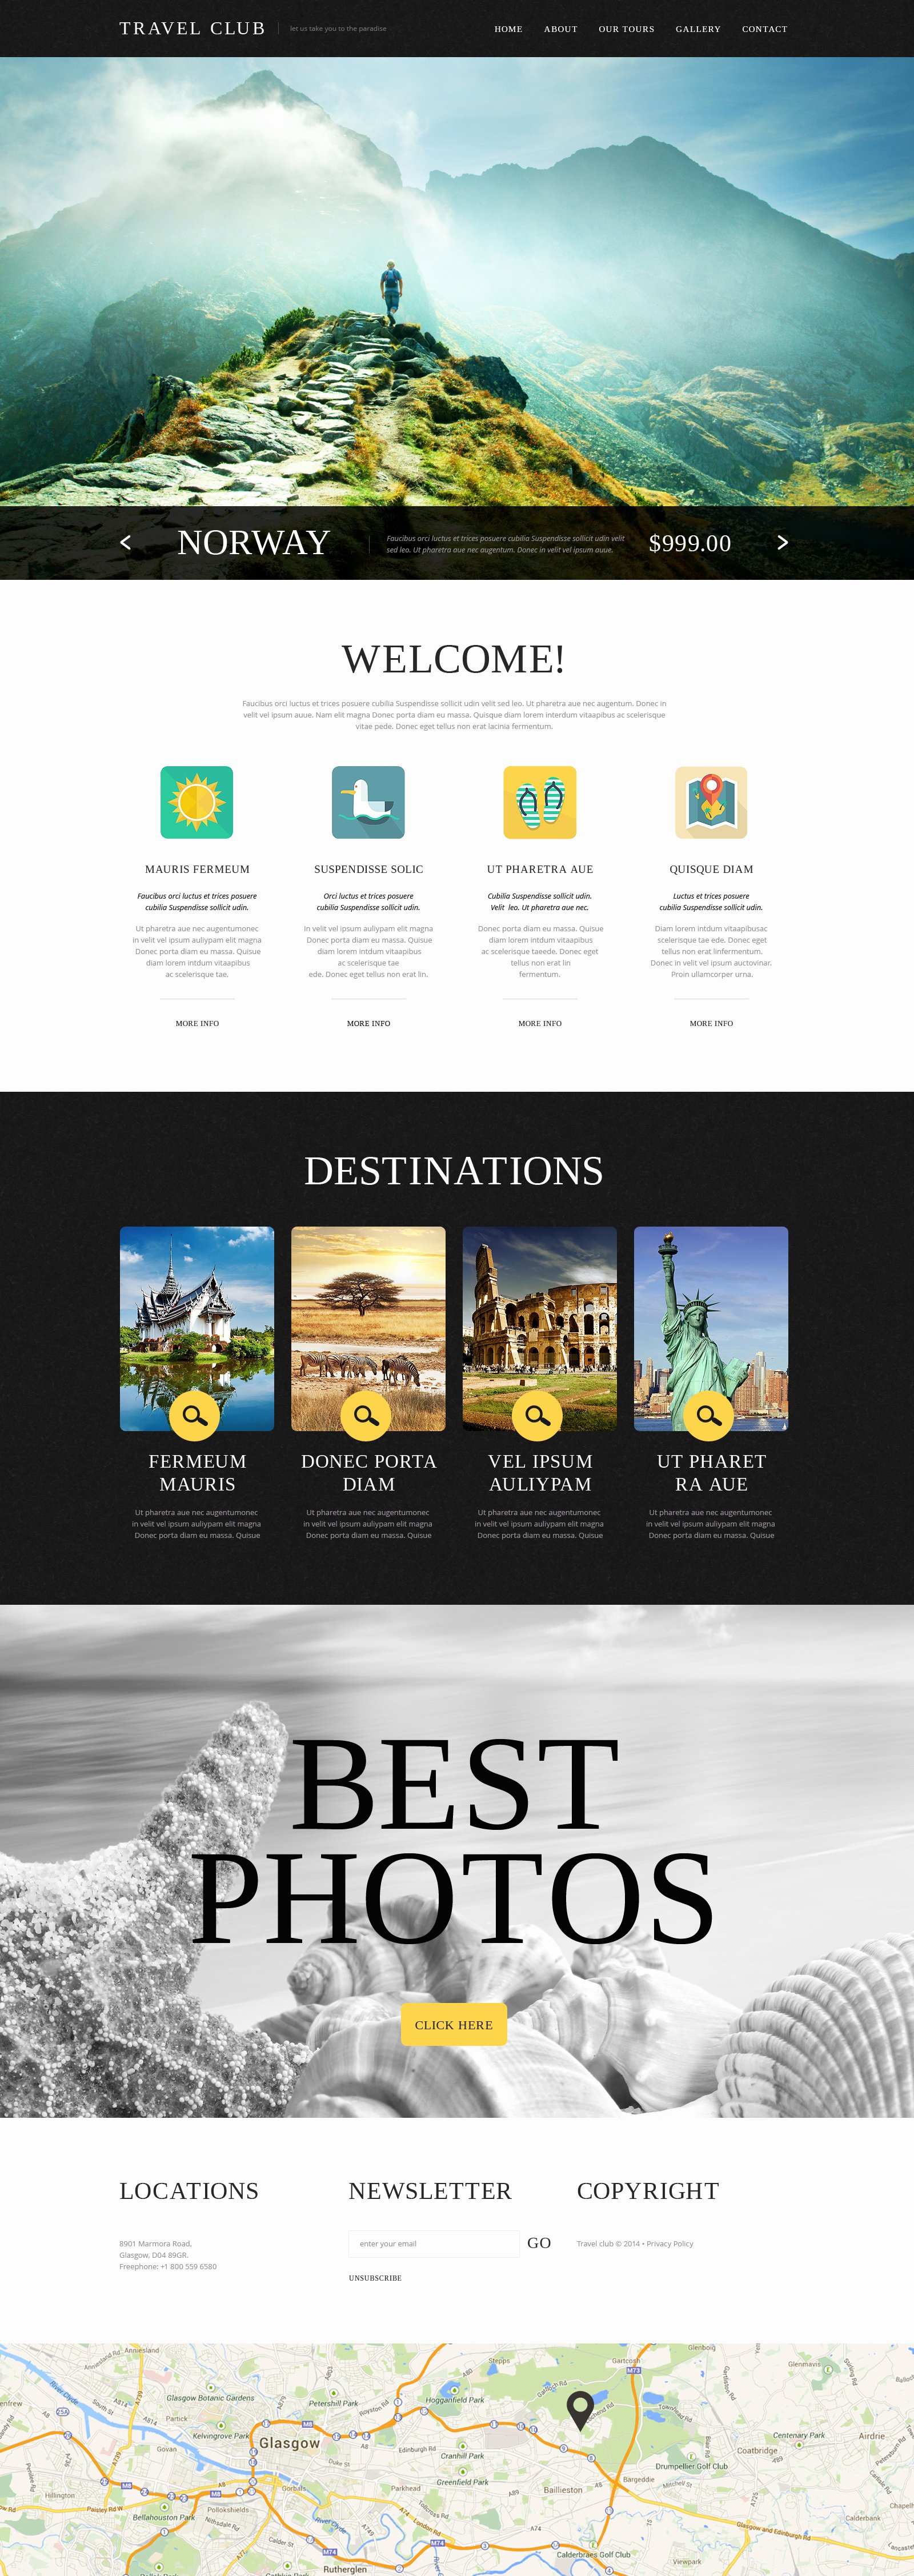 Travel Agent Website Template Beautiful Travel Agency Website Template